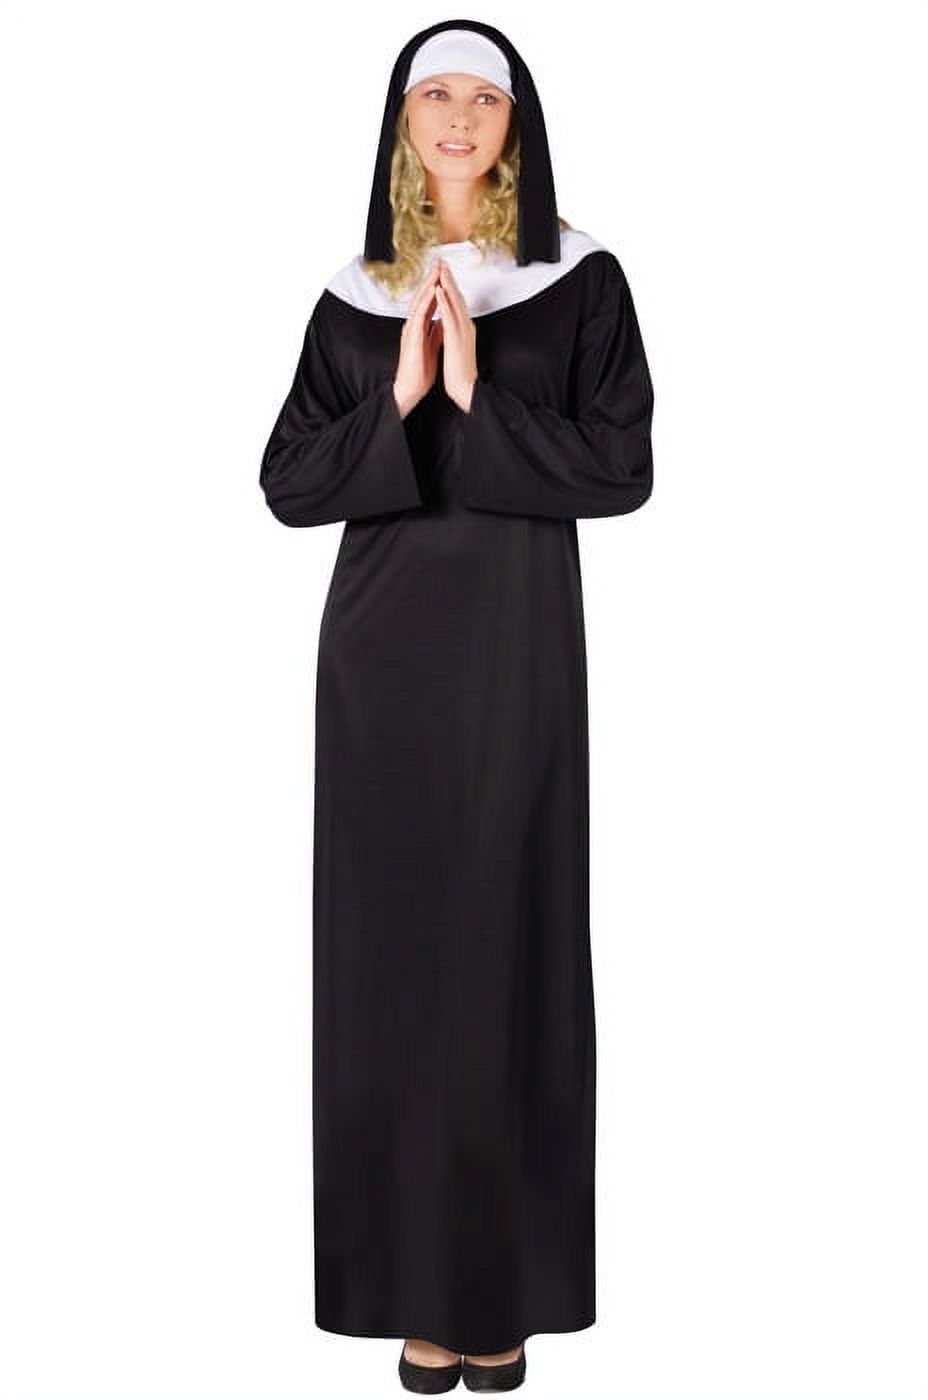 Nun Costume - image 1 of 2